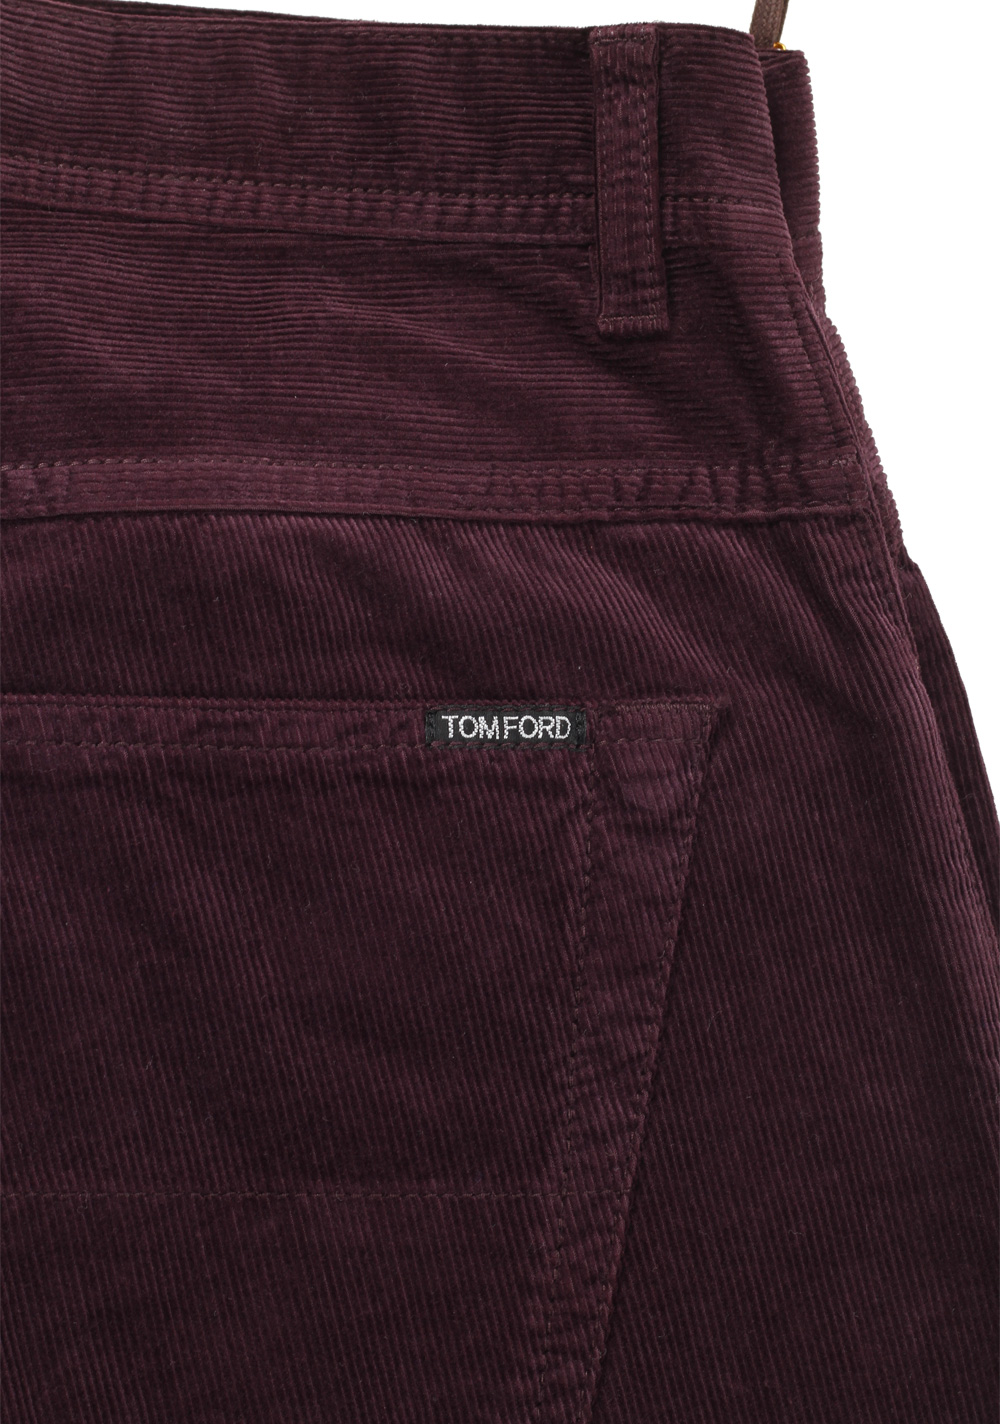 TOM FORD Aubergine Jeans TFD003 Size 52 / 36 U.S. | Costume Limité